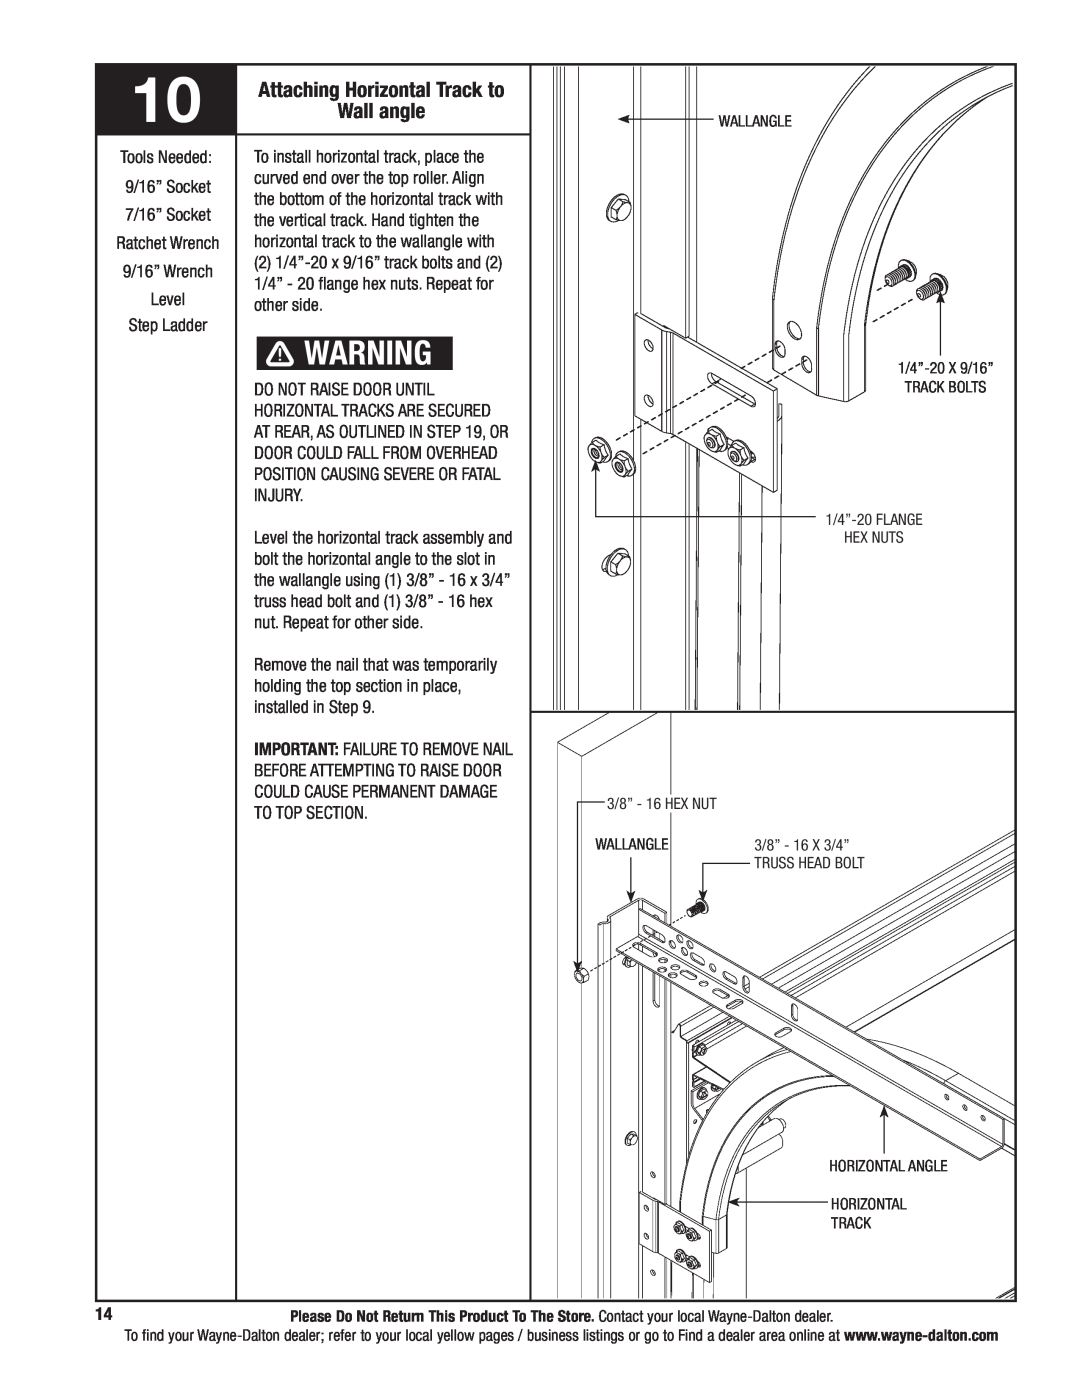 Wayne-Dalton 9800 installation instructions Attaching Horizontal Track to, Wall angle 